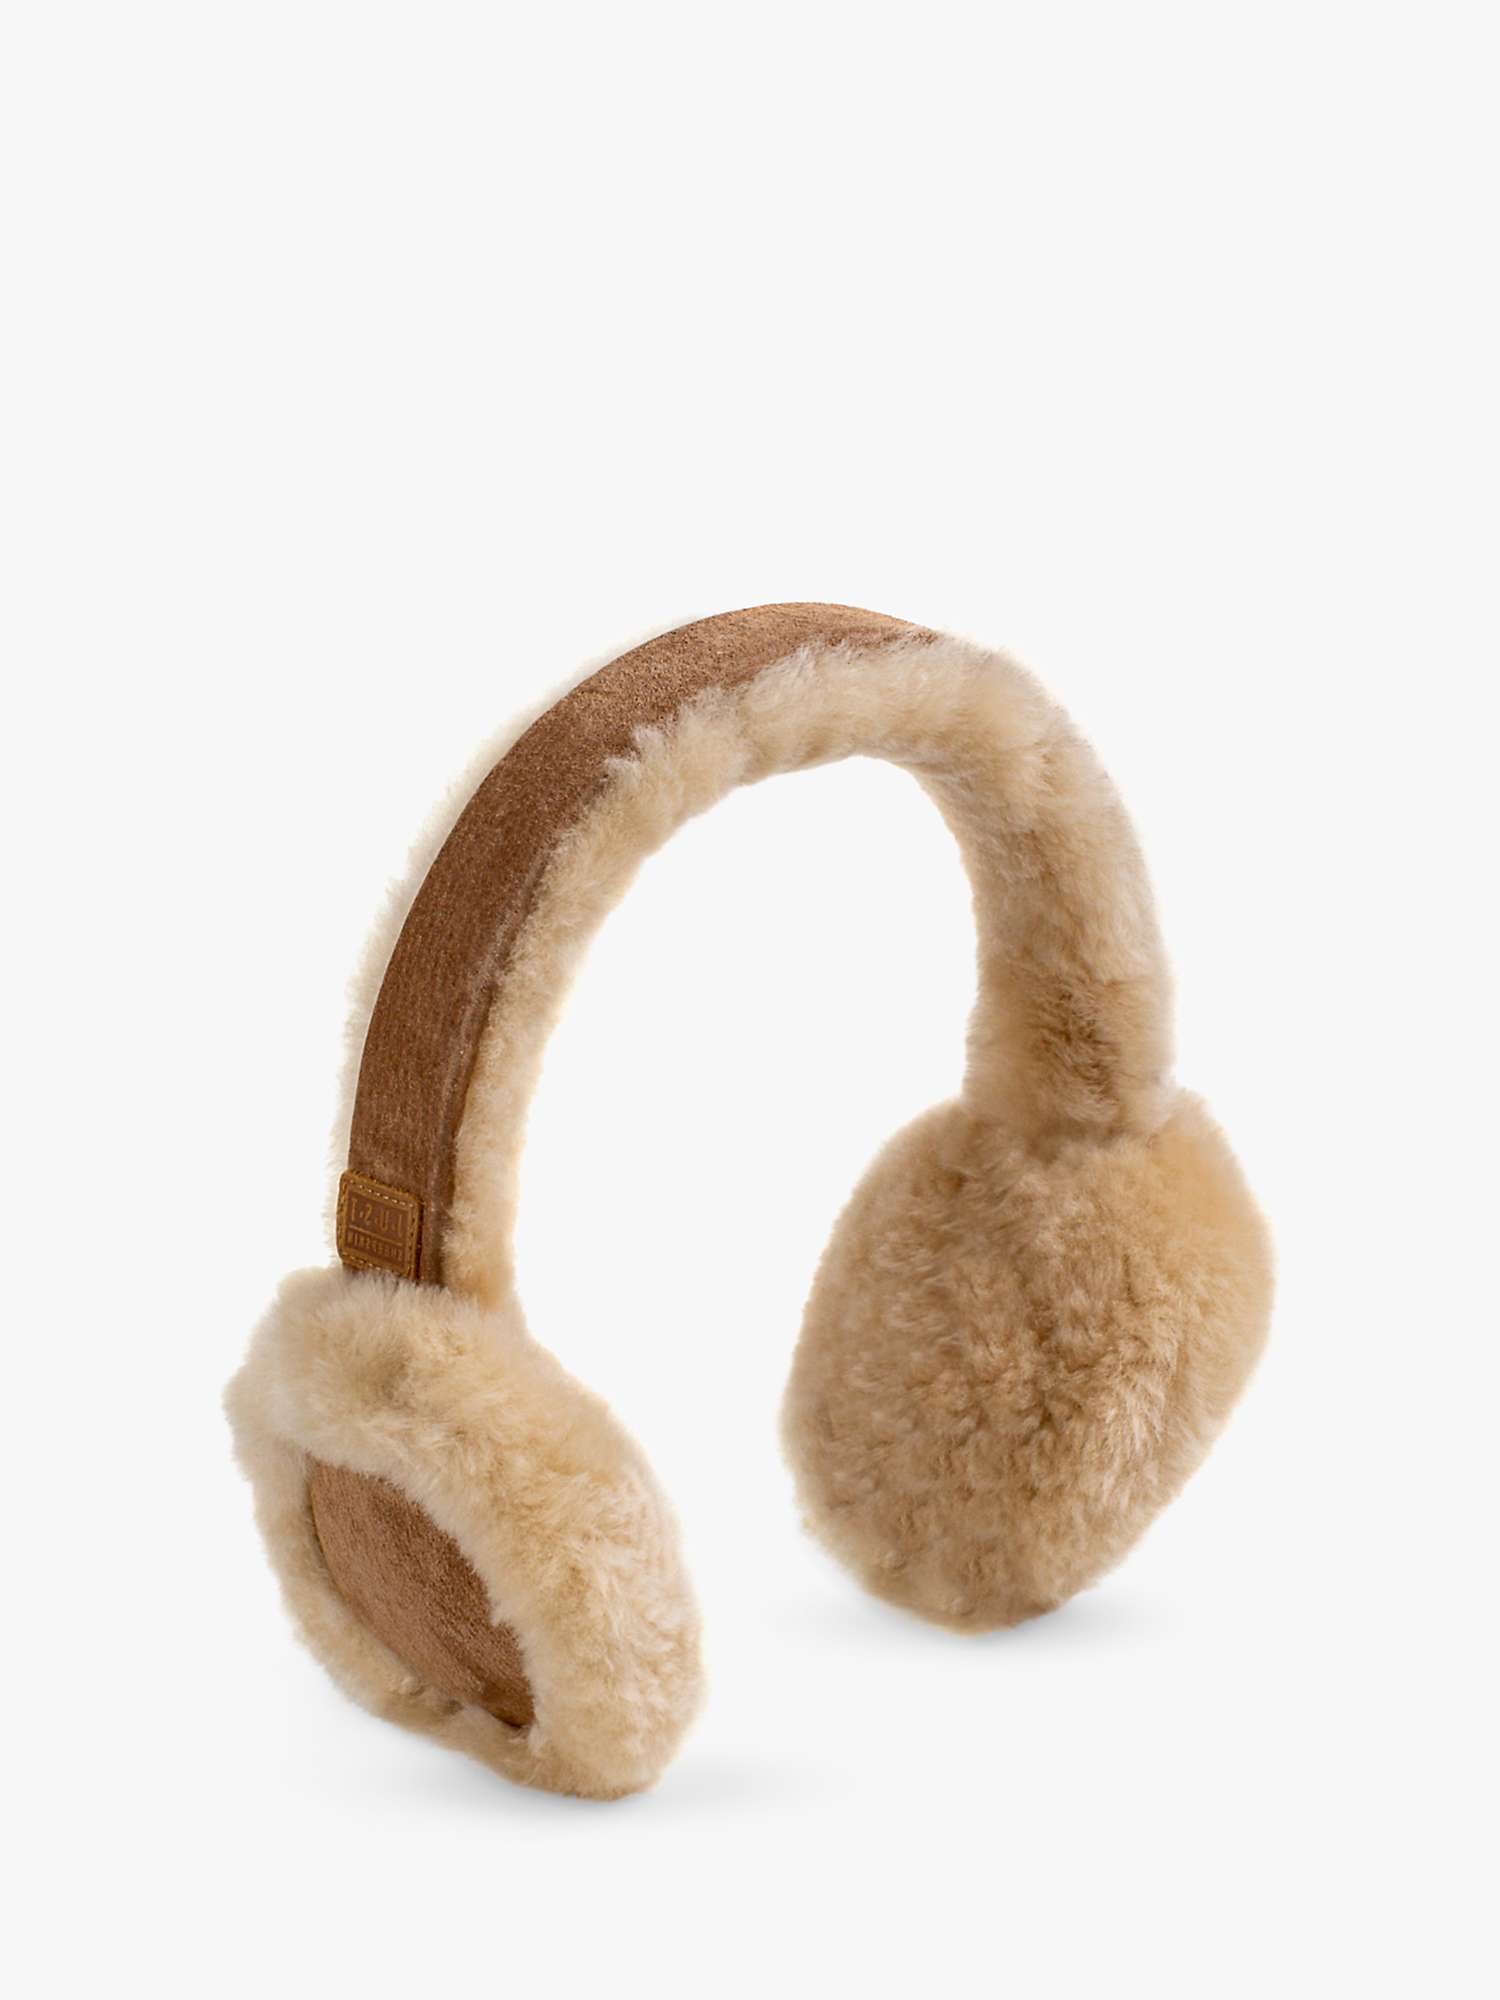 Buy Just Sheepskin Brompton Sheepskin Ear Muffs Online at johnlewis.com